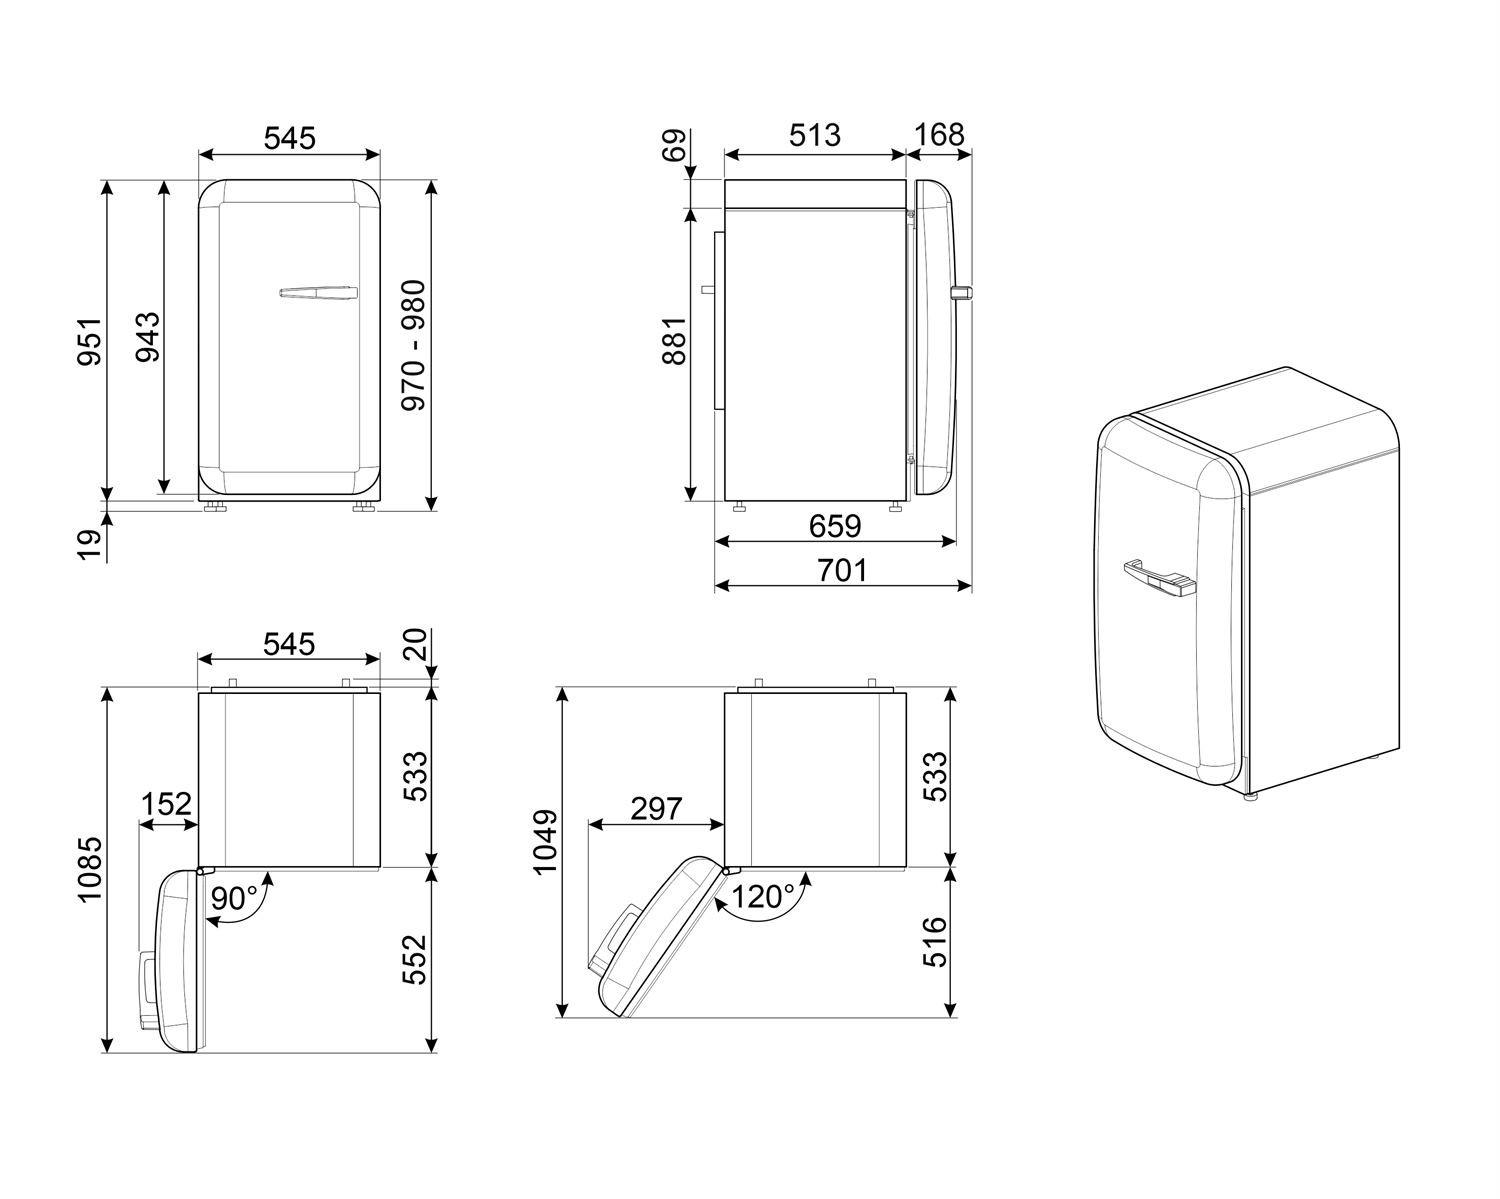 Maattekening SMEG koelkast tafelmodel zwart FAB10LBL5